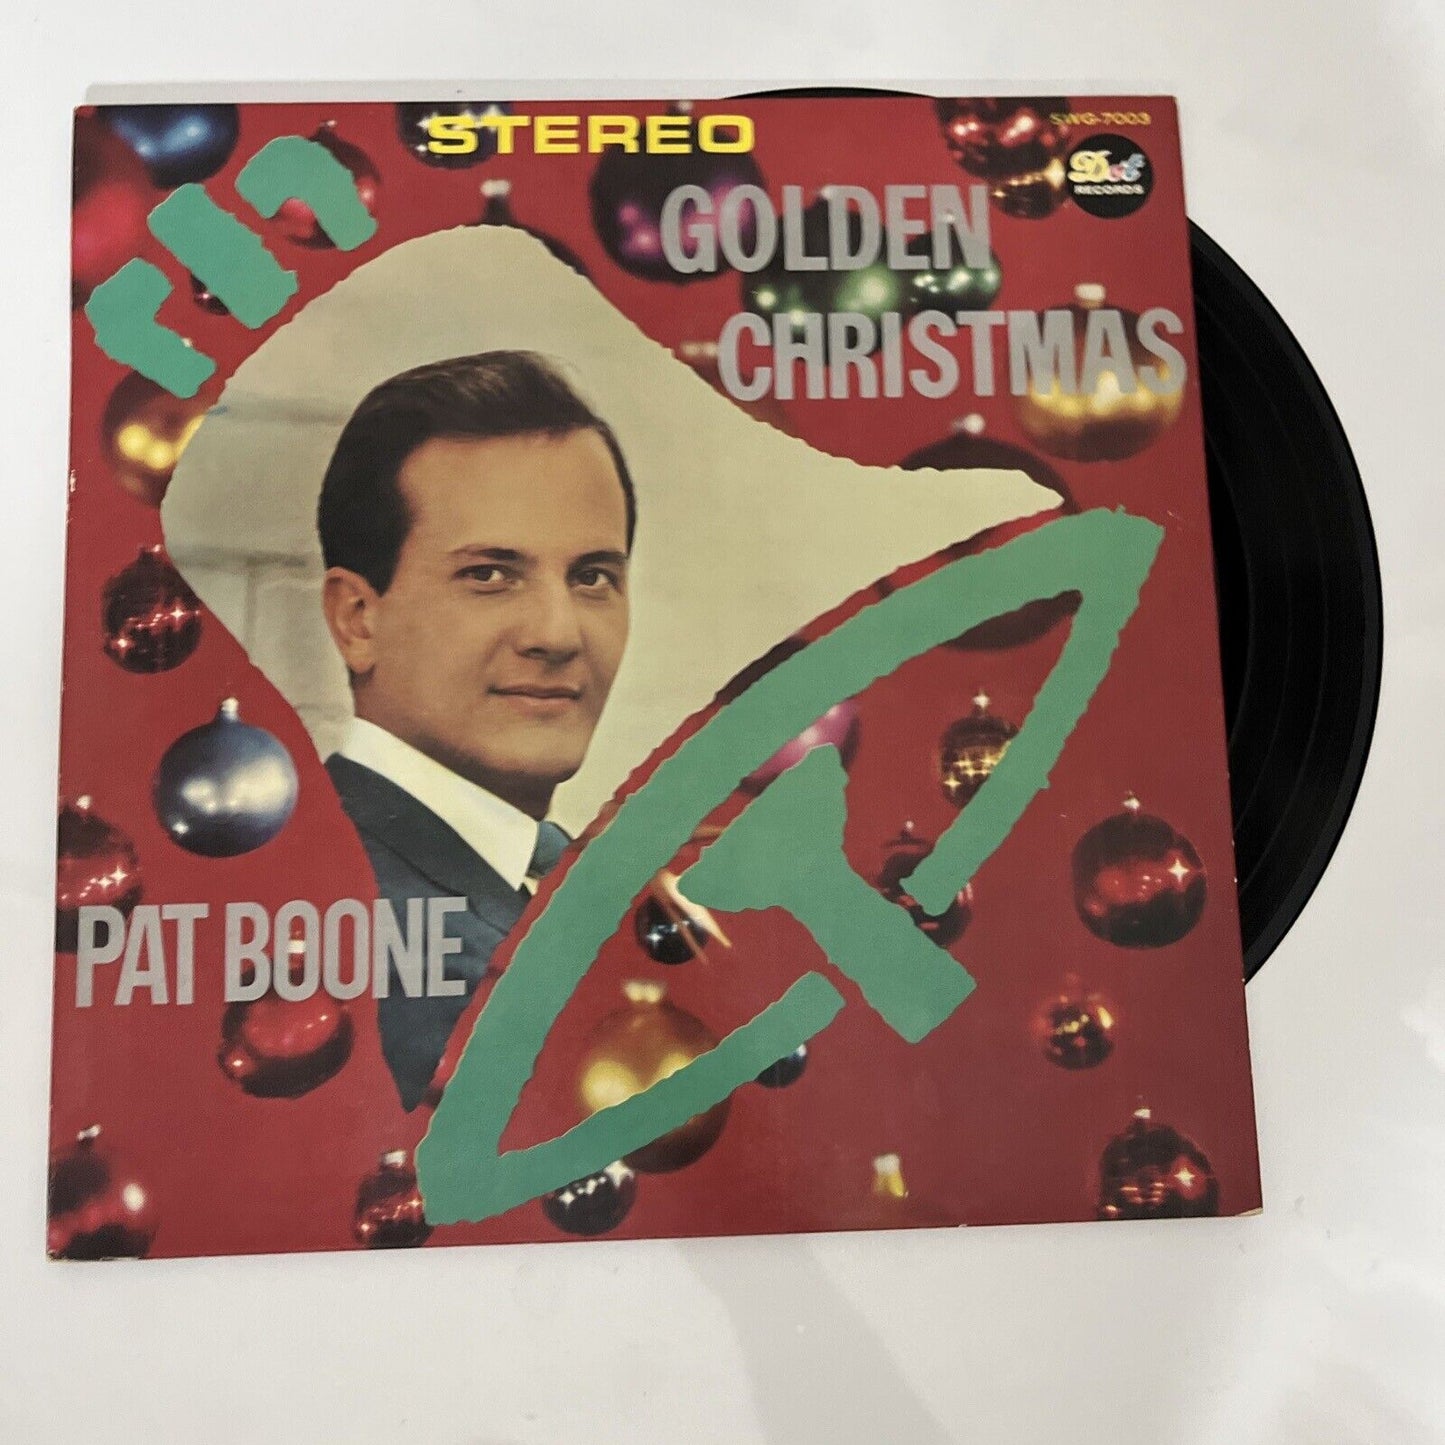 Pat Boone - Golden Christmas LP Vinyl Record SWG-7003